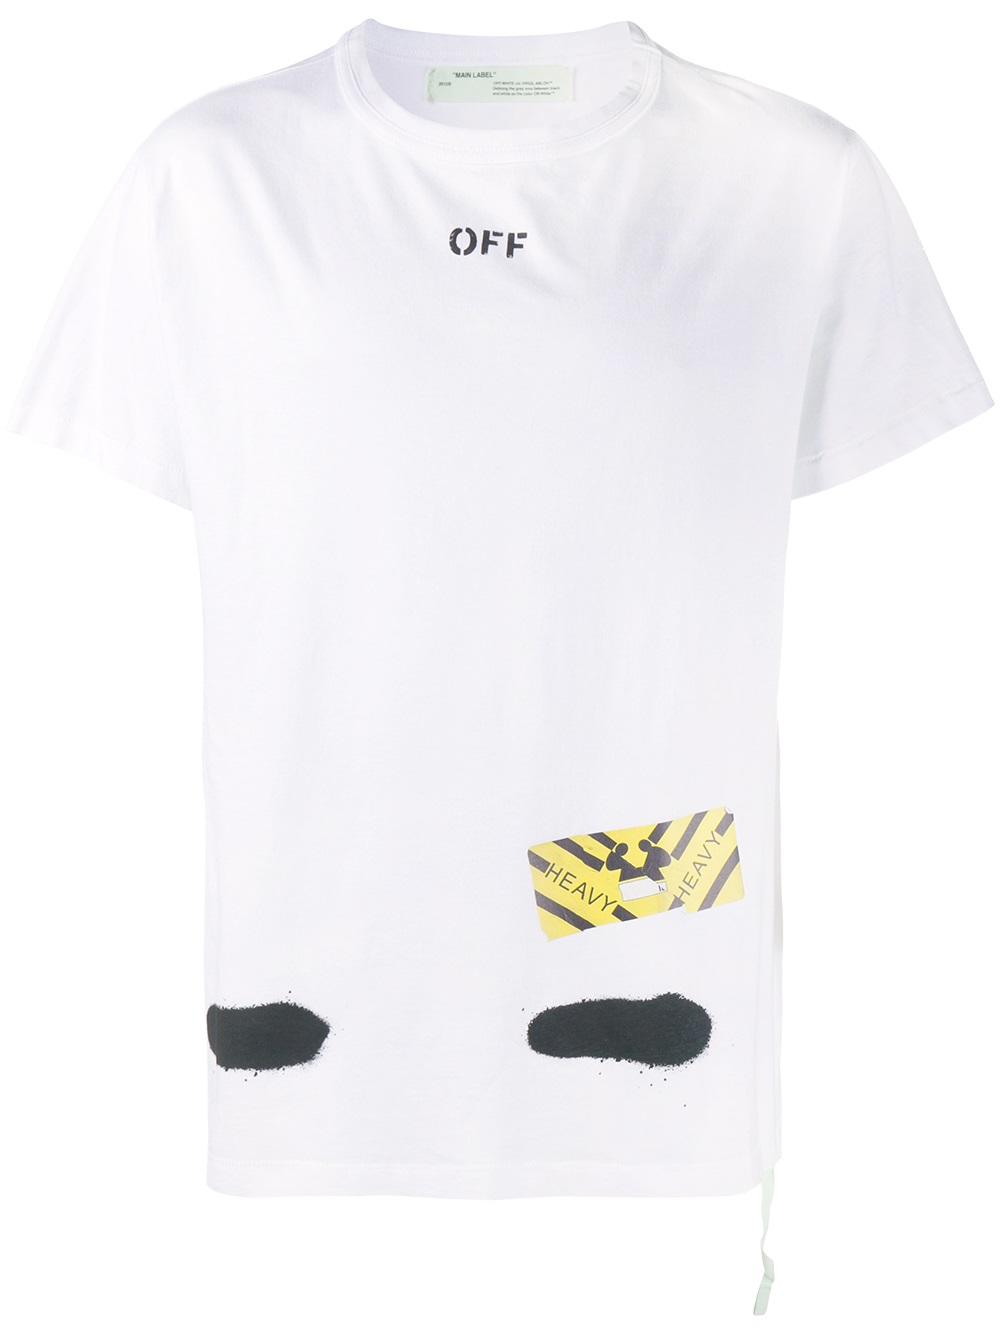 Off-White graffiti logo print t-shirt 0110 WHITE Men Clothing T-Shirts